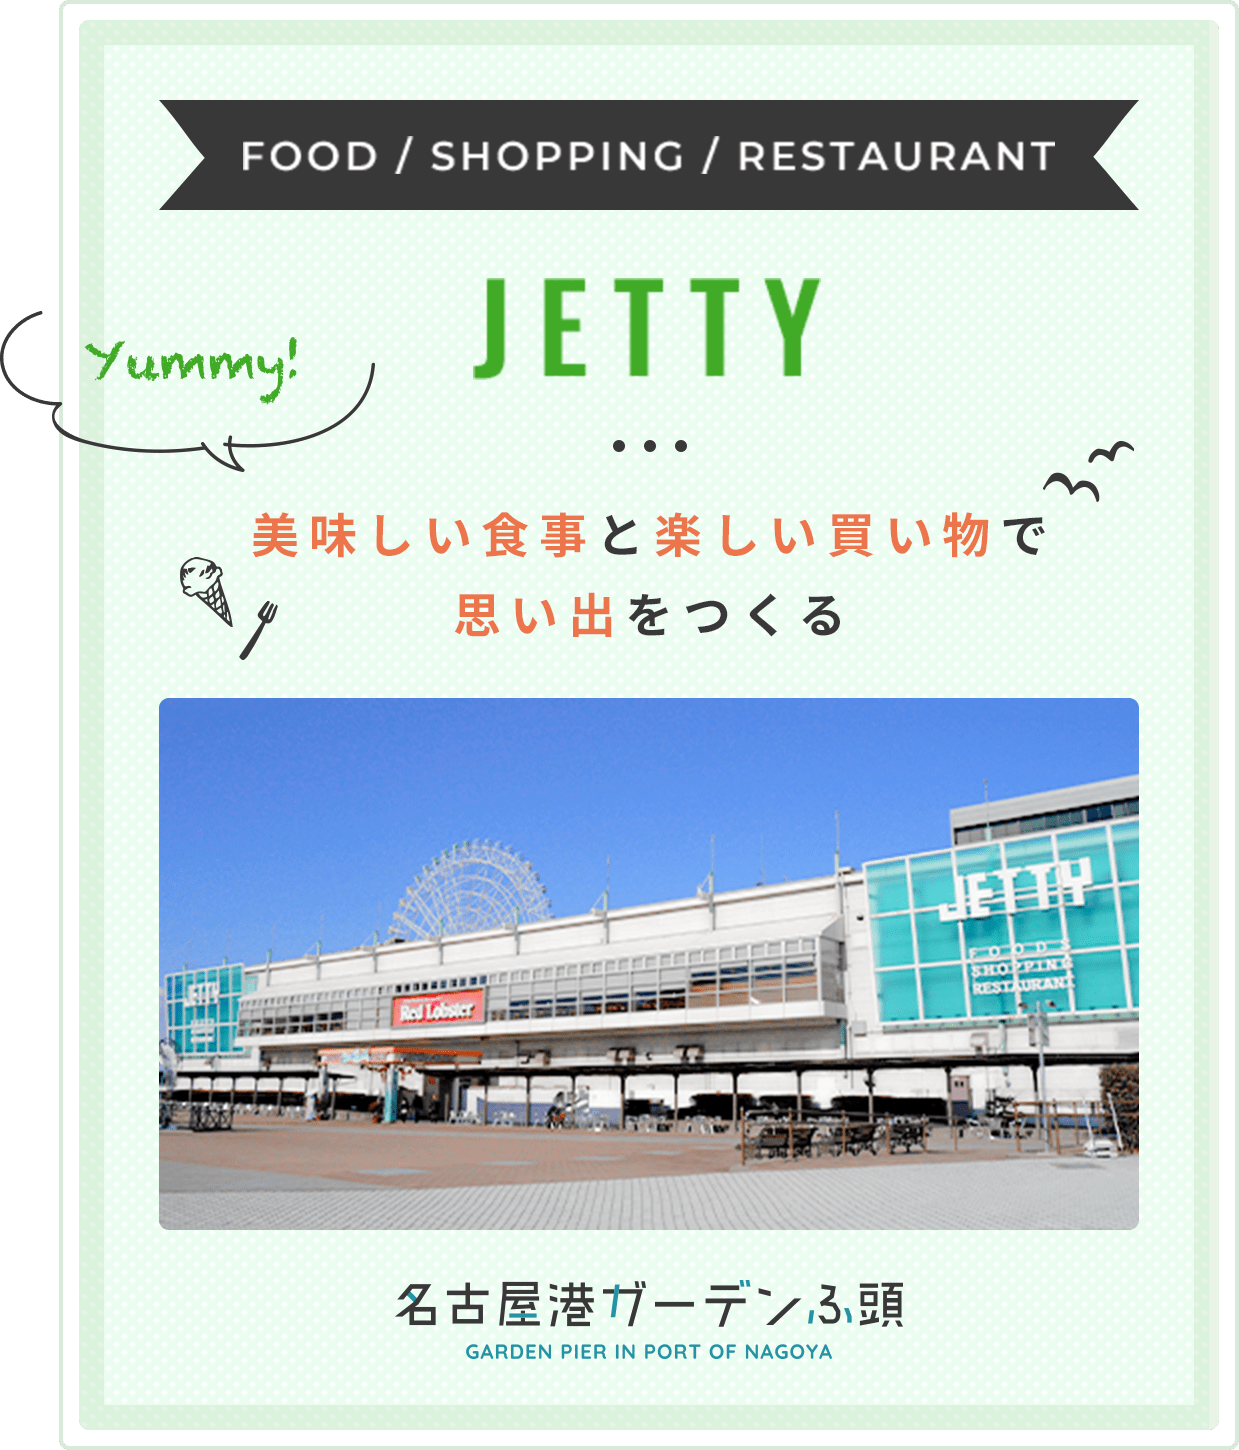 FOOD / SHOPPING / RESTAURANT - JETTY